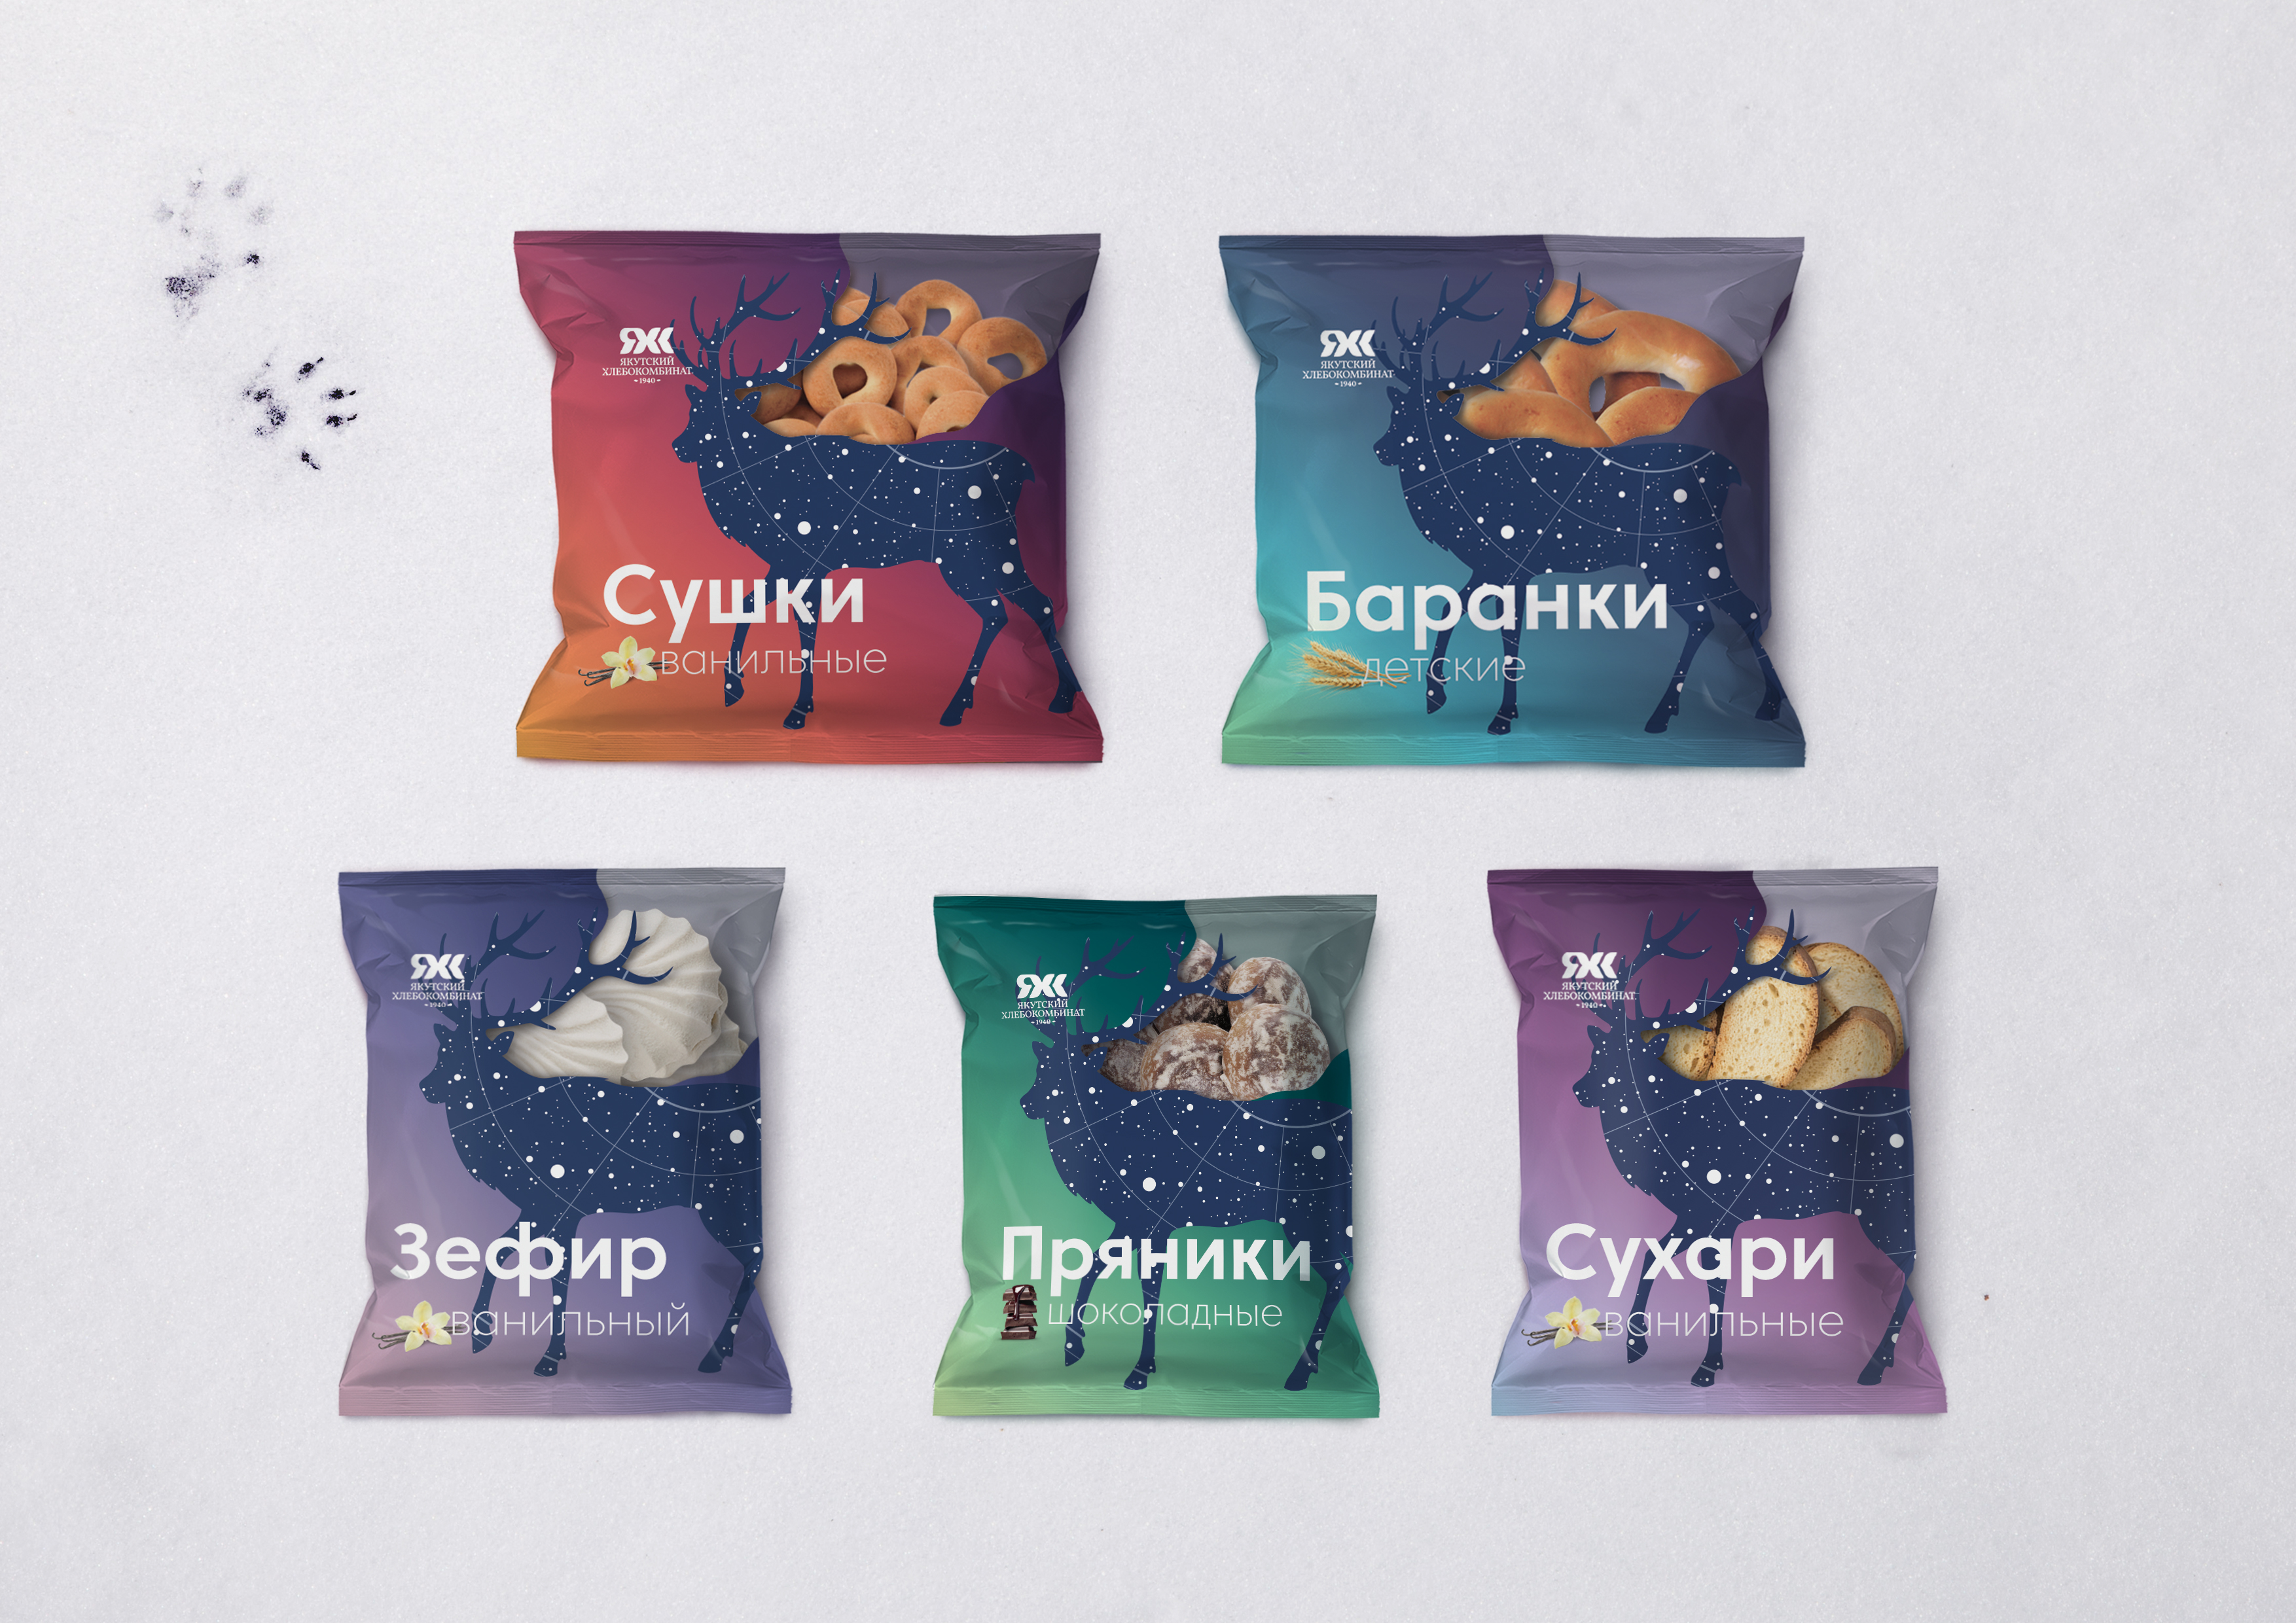 “Design Department” Branding Agency Make Rebranding of Yakut Baker Factory Packaging